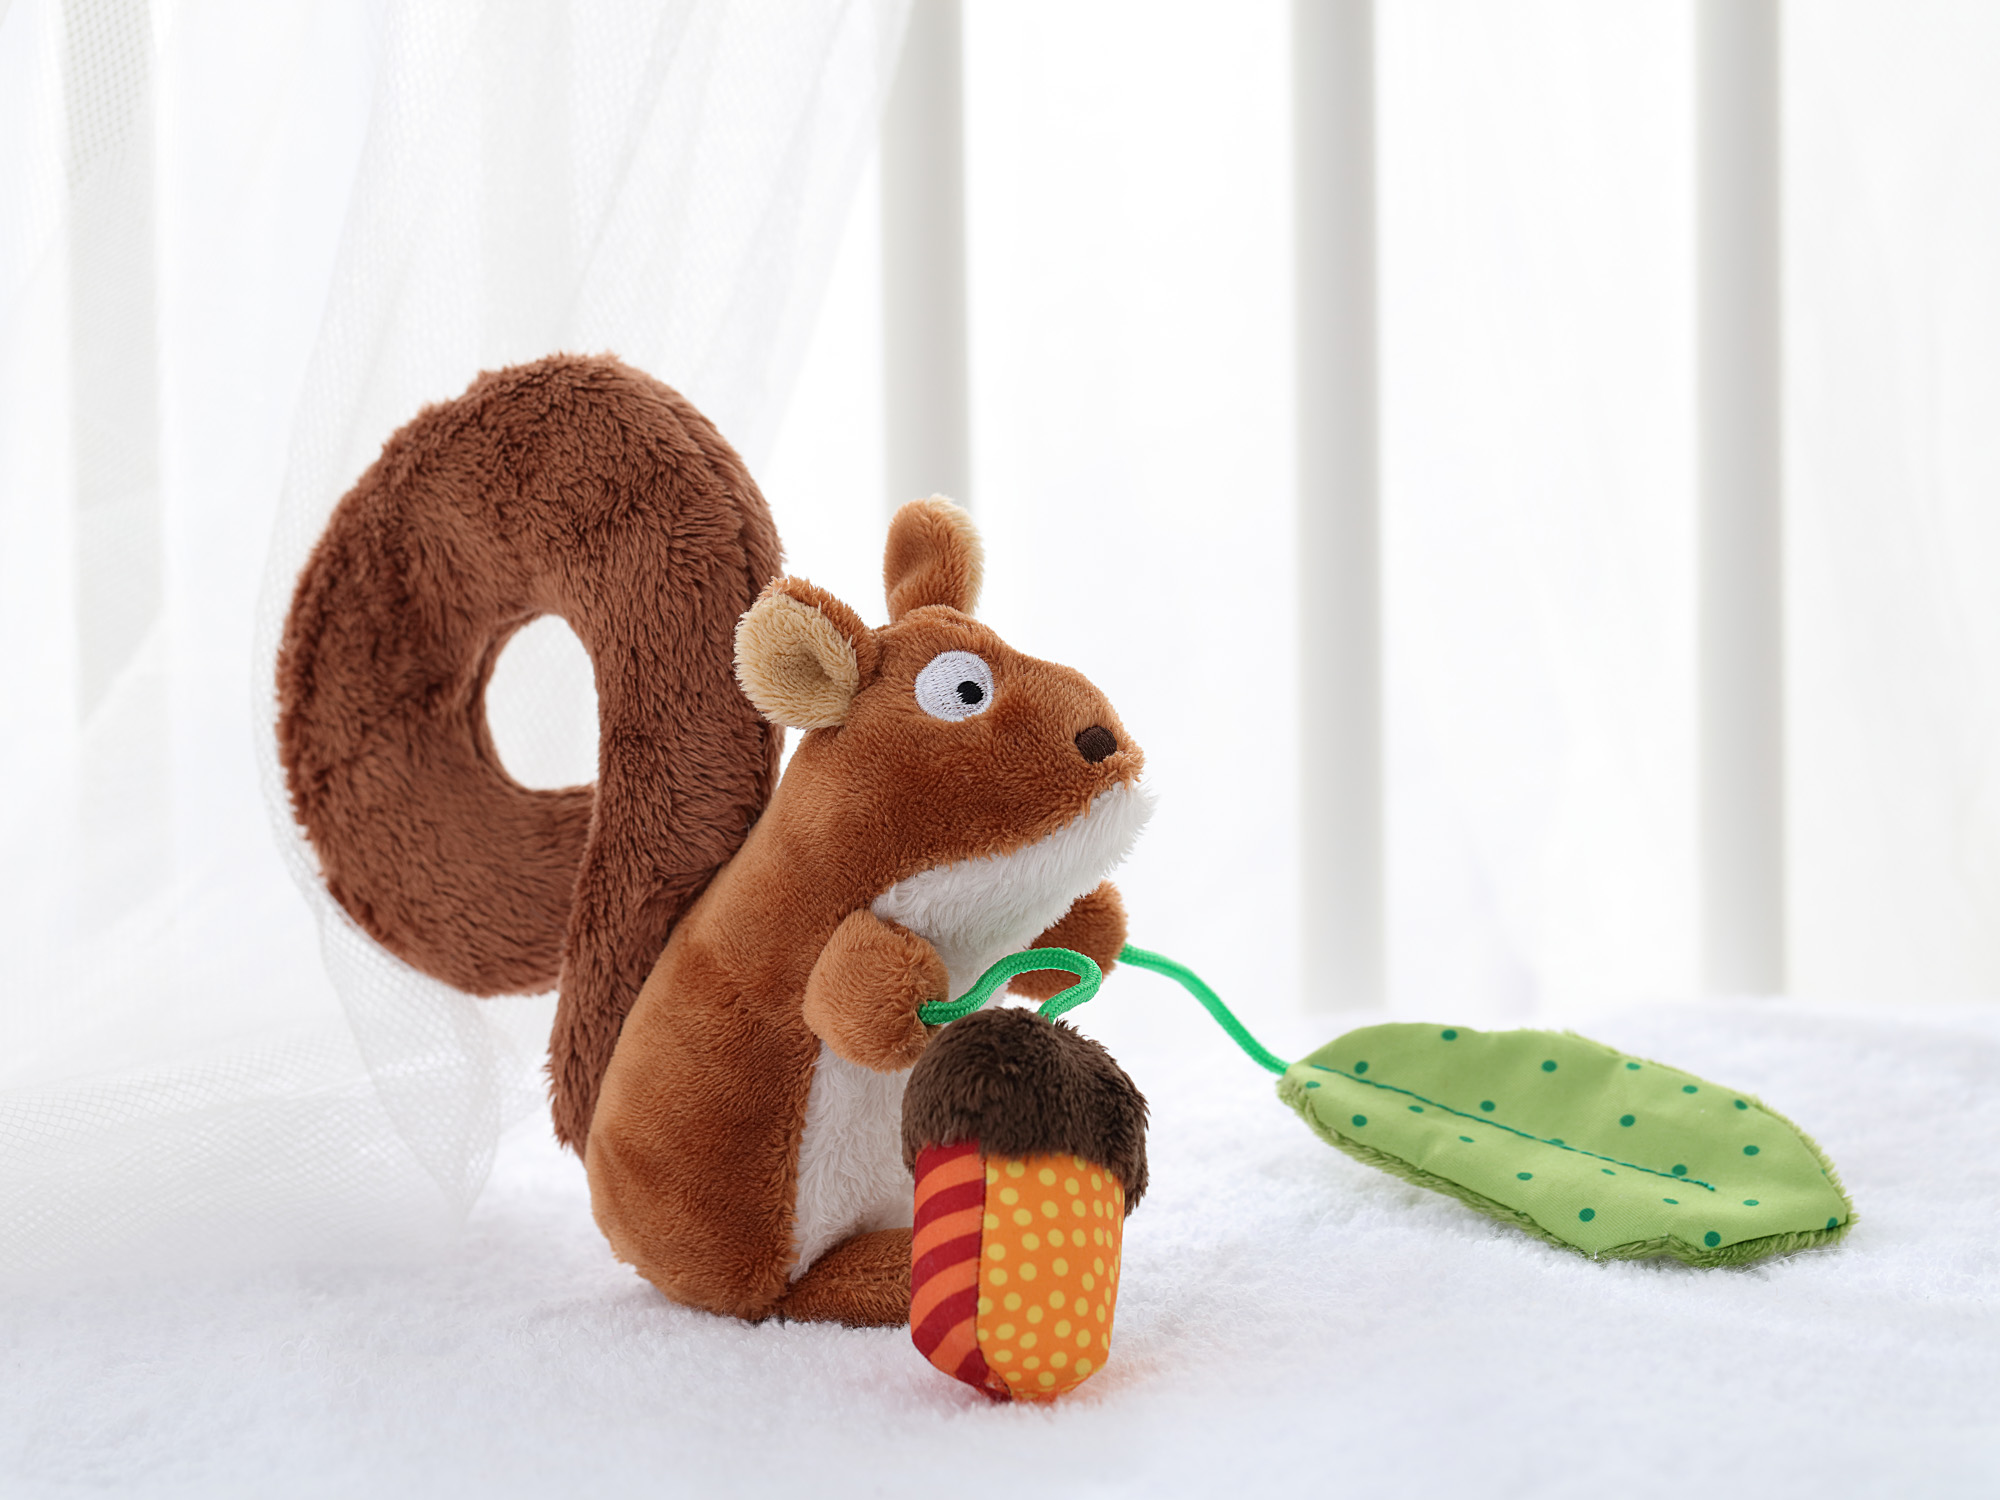 Hanging toy squirrel